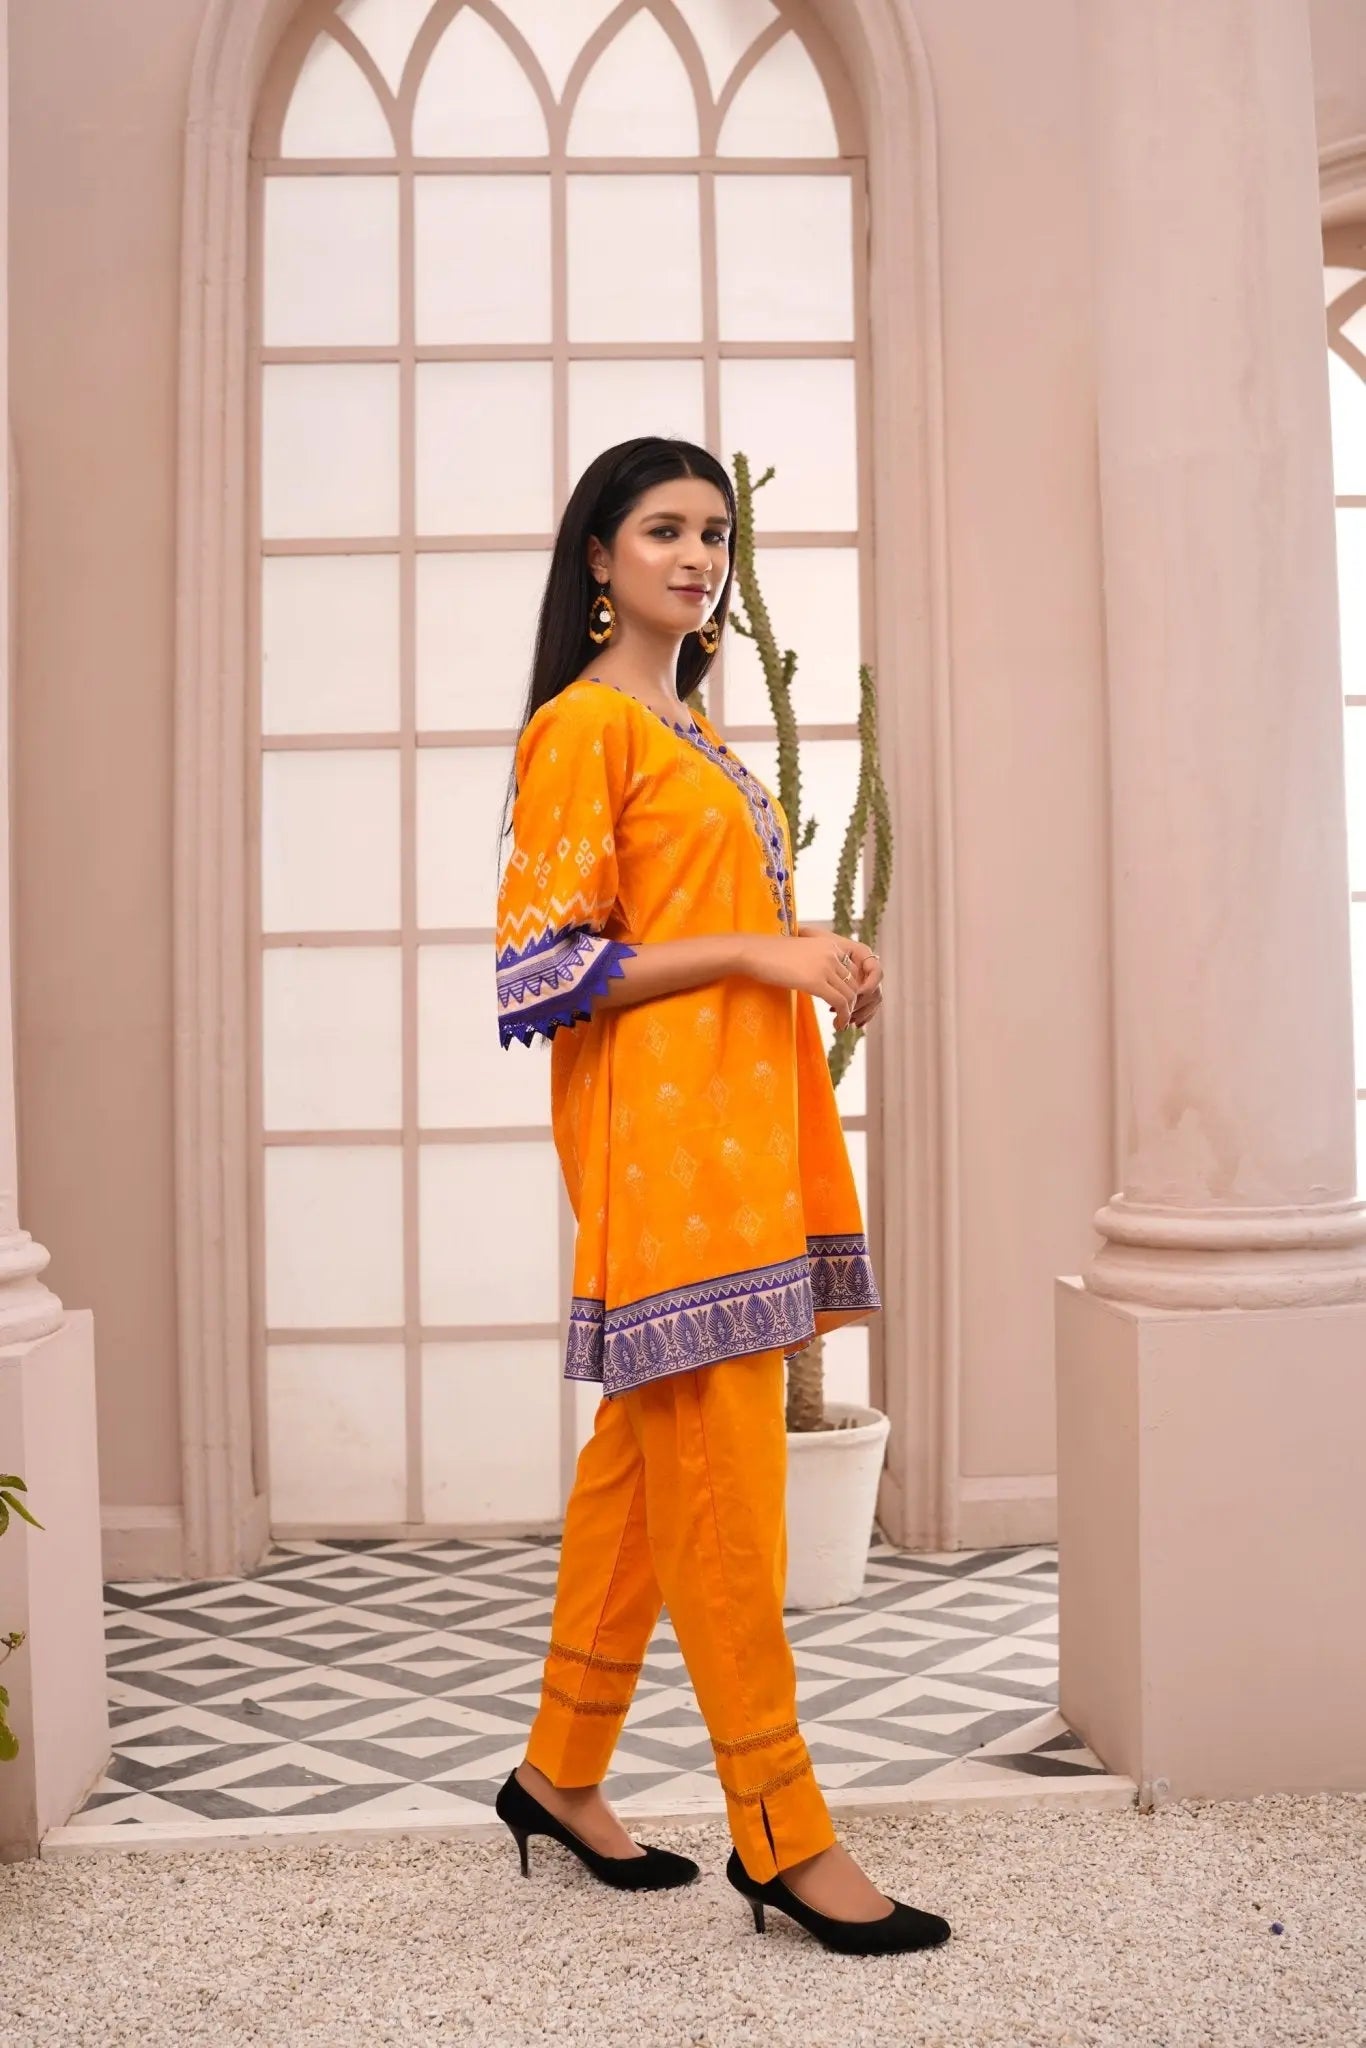 IshDeena Indian Kurtis for Women: Stylish Long Shirt, 100% Cotton, Casual & Festive M-3XL - Indian Tunic Tops for Ladies - IshDeena